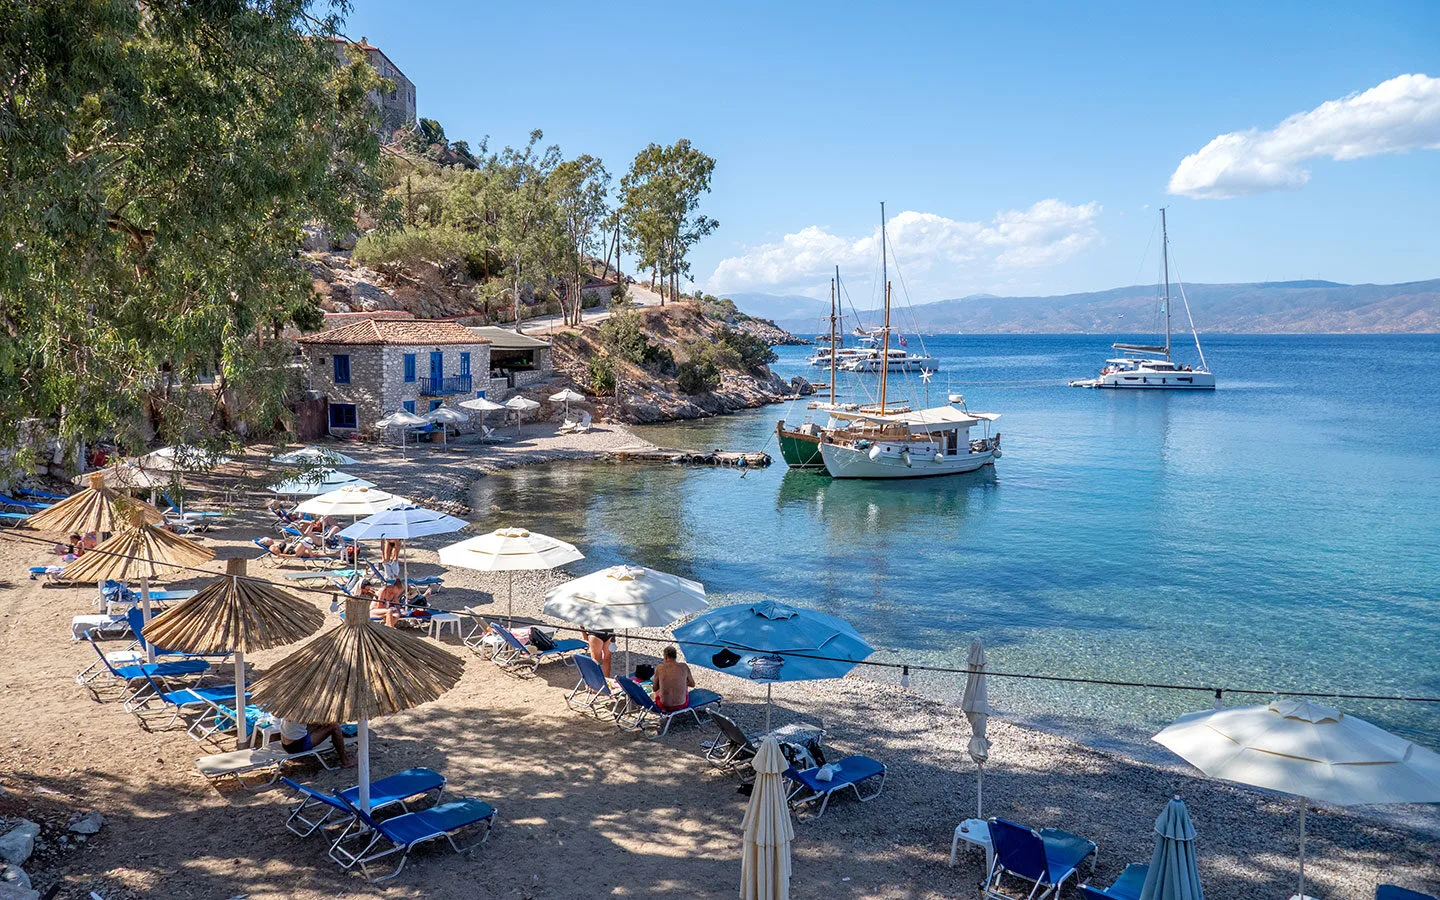 Best beaches in Hydra, Greece: The Mandraki 1800 beach